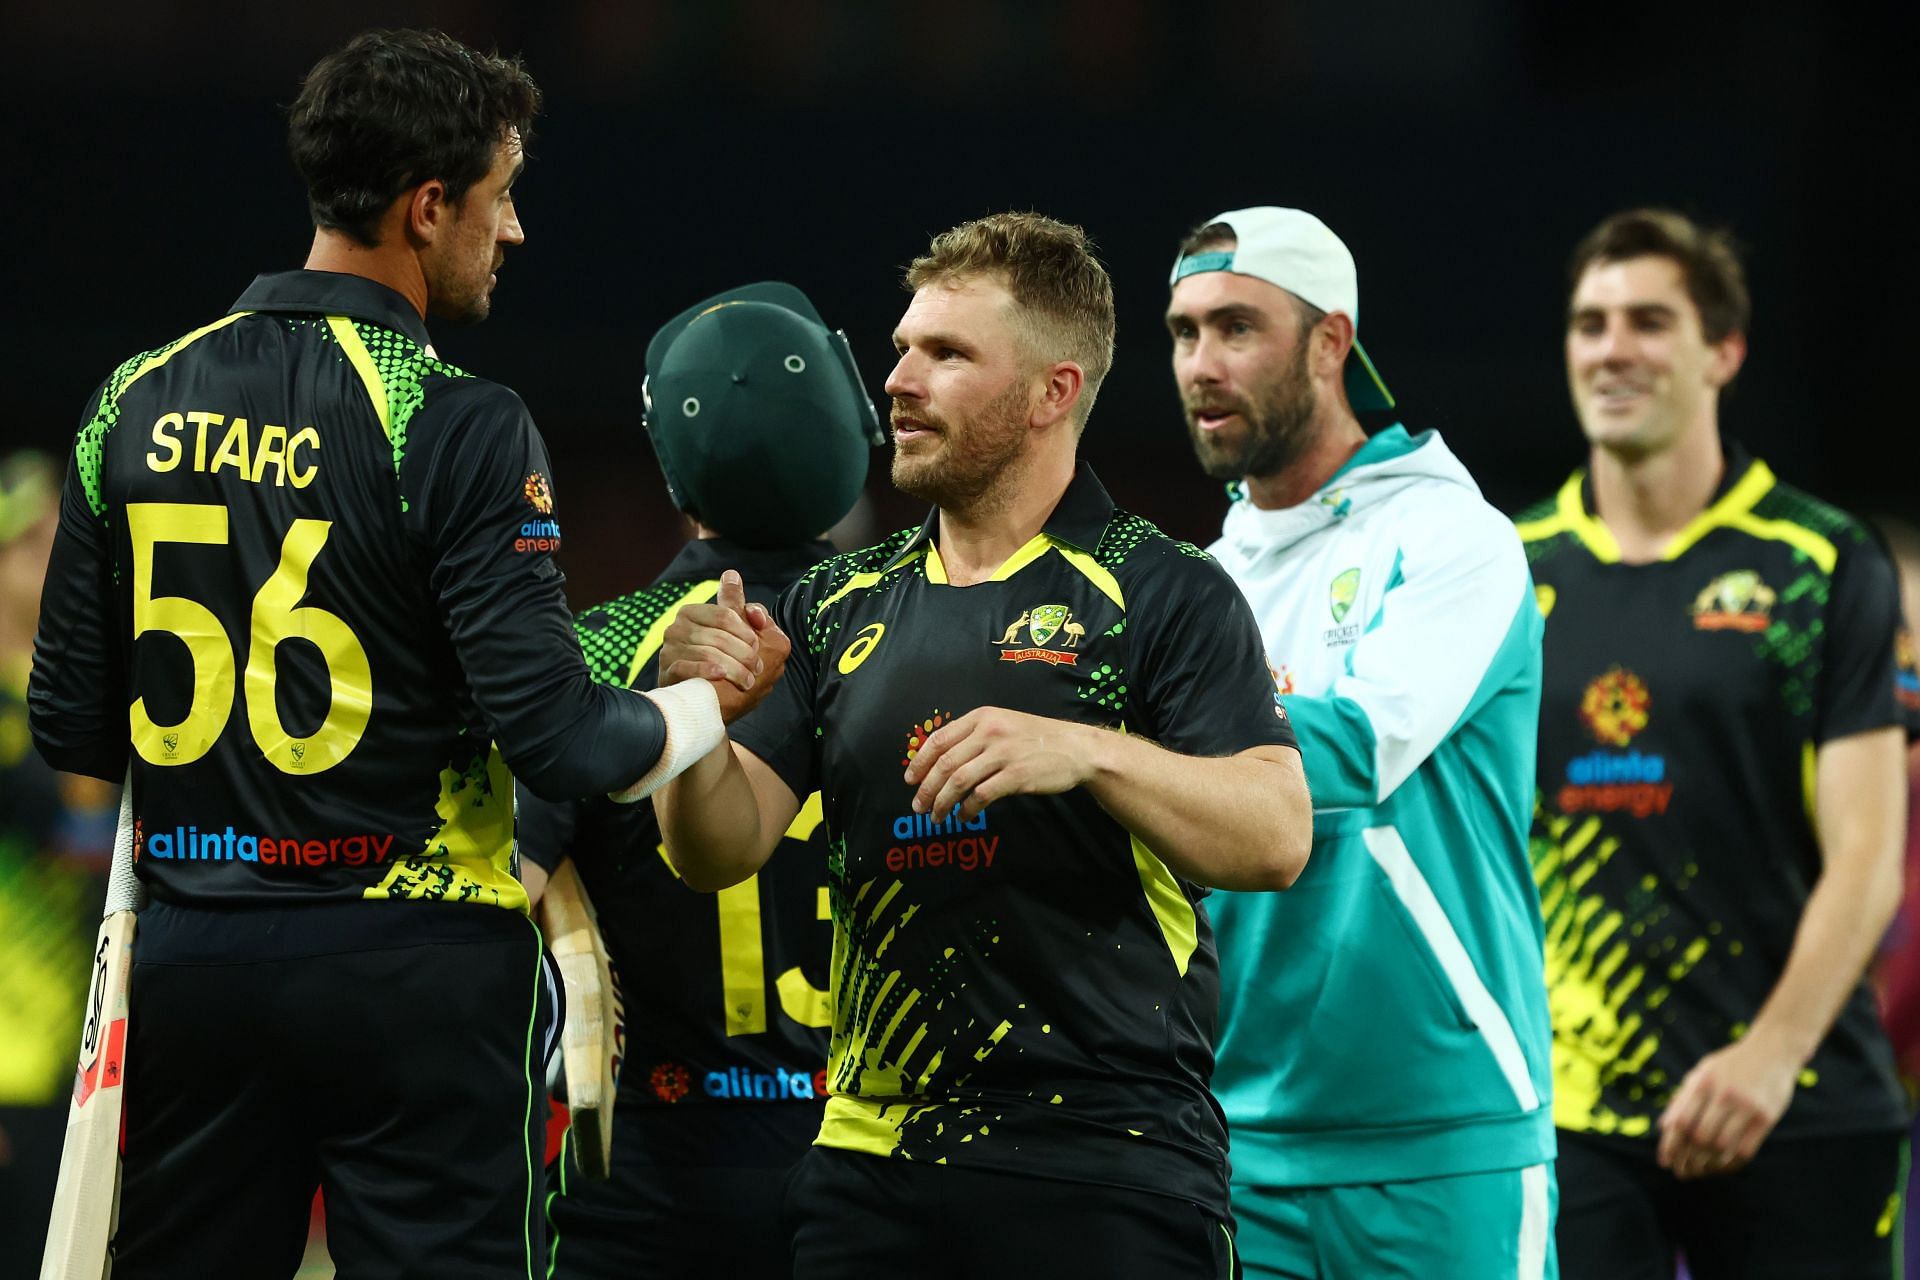 Australia v West Indies - T20I Series: Game 1